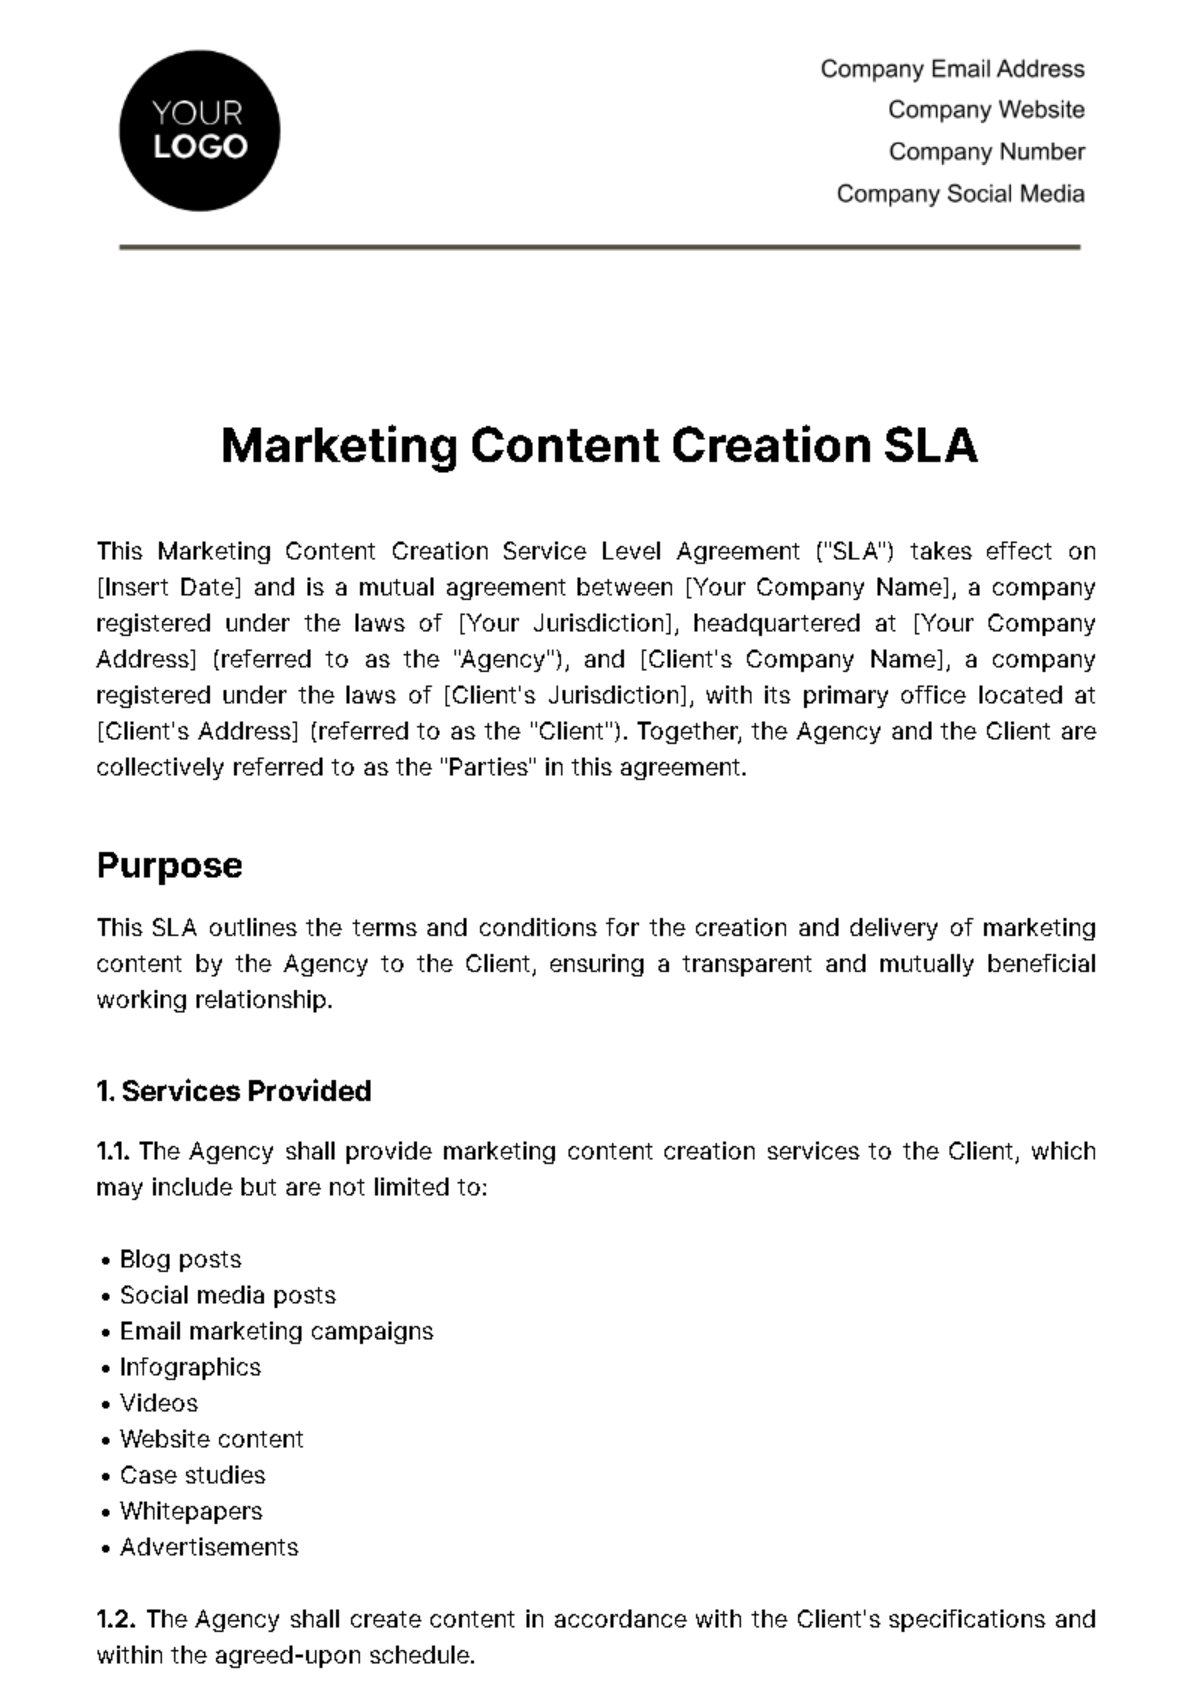 Free Marketing Content Creation SLA Template